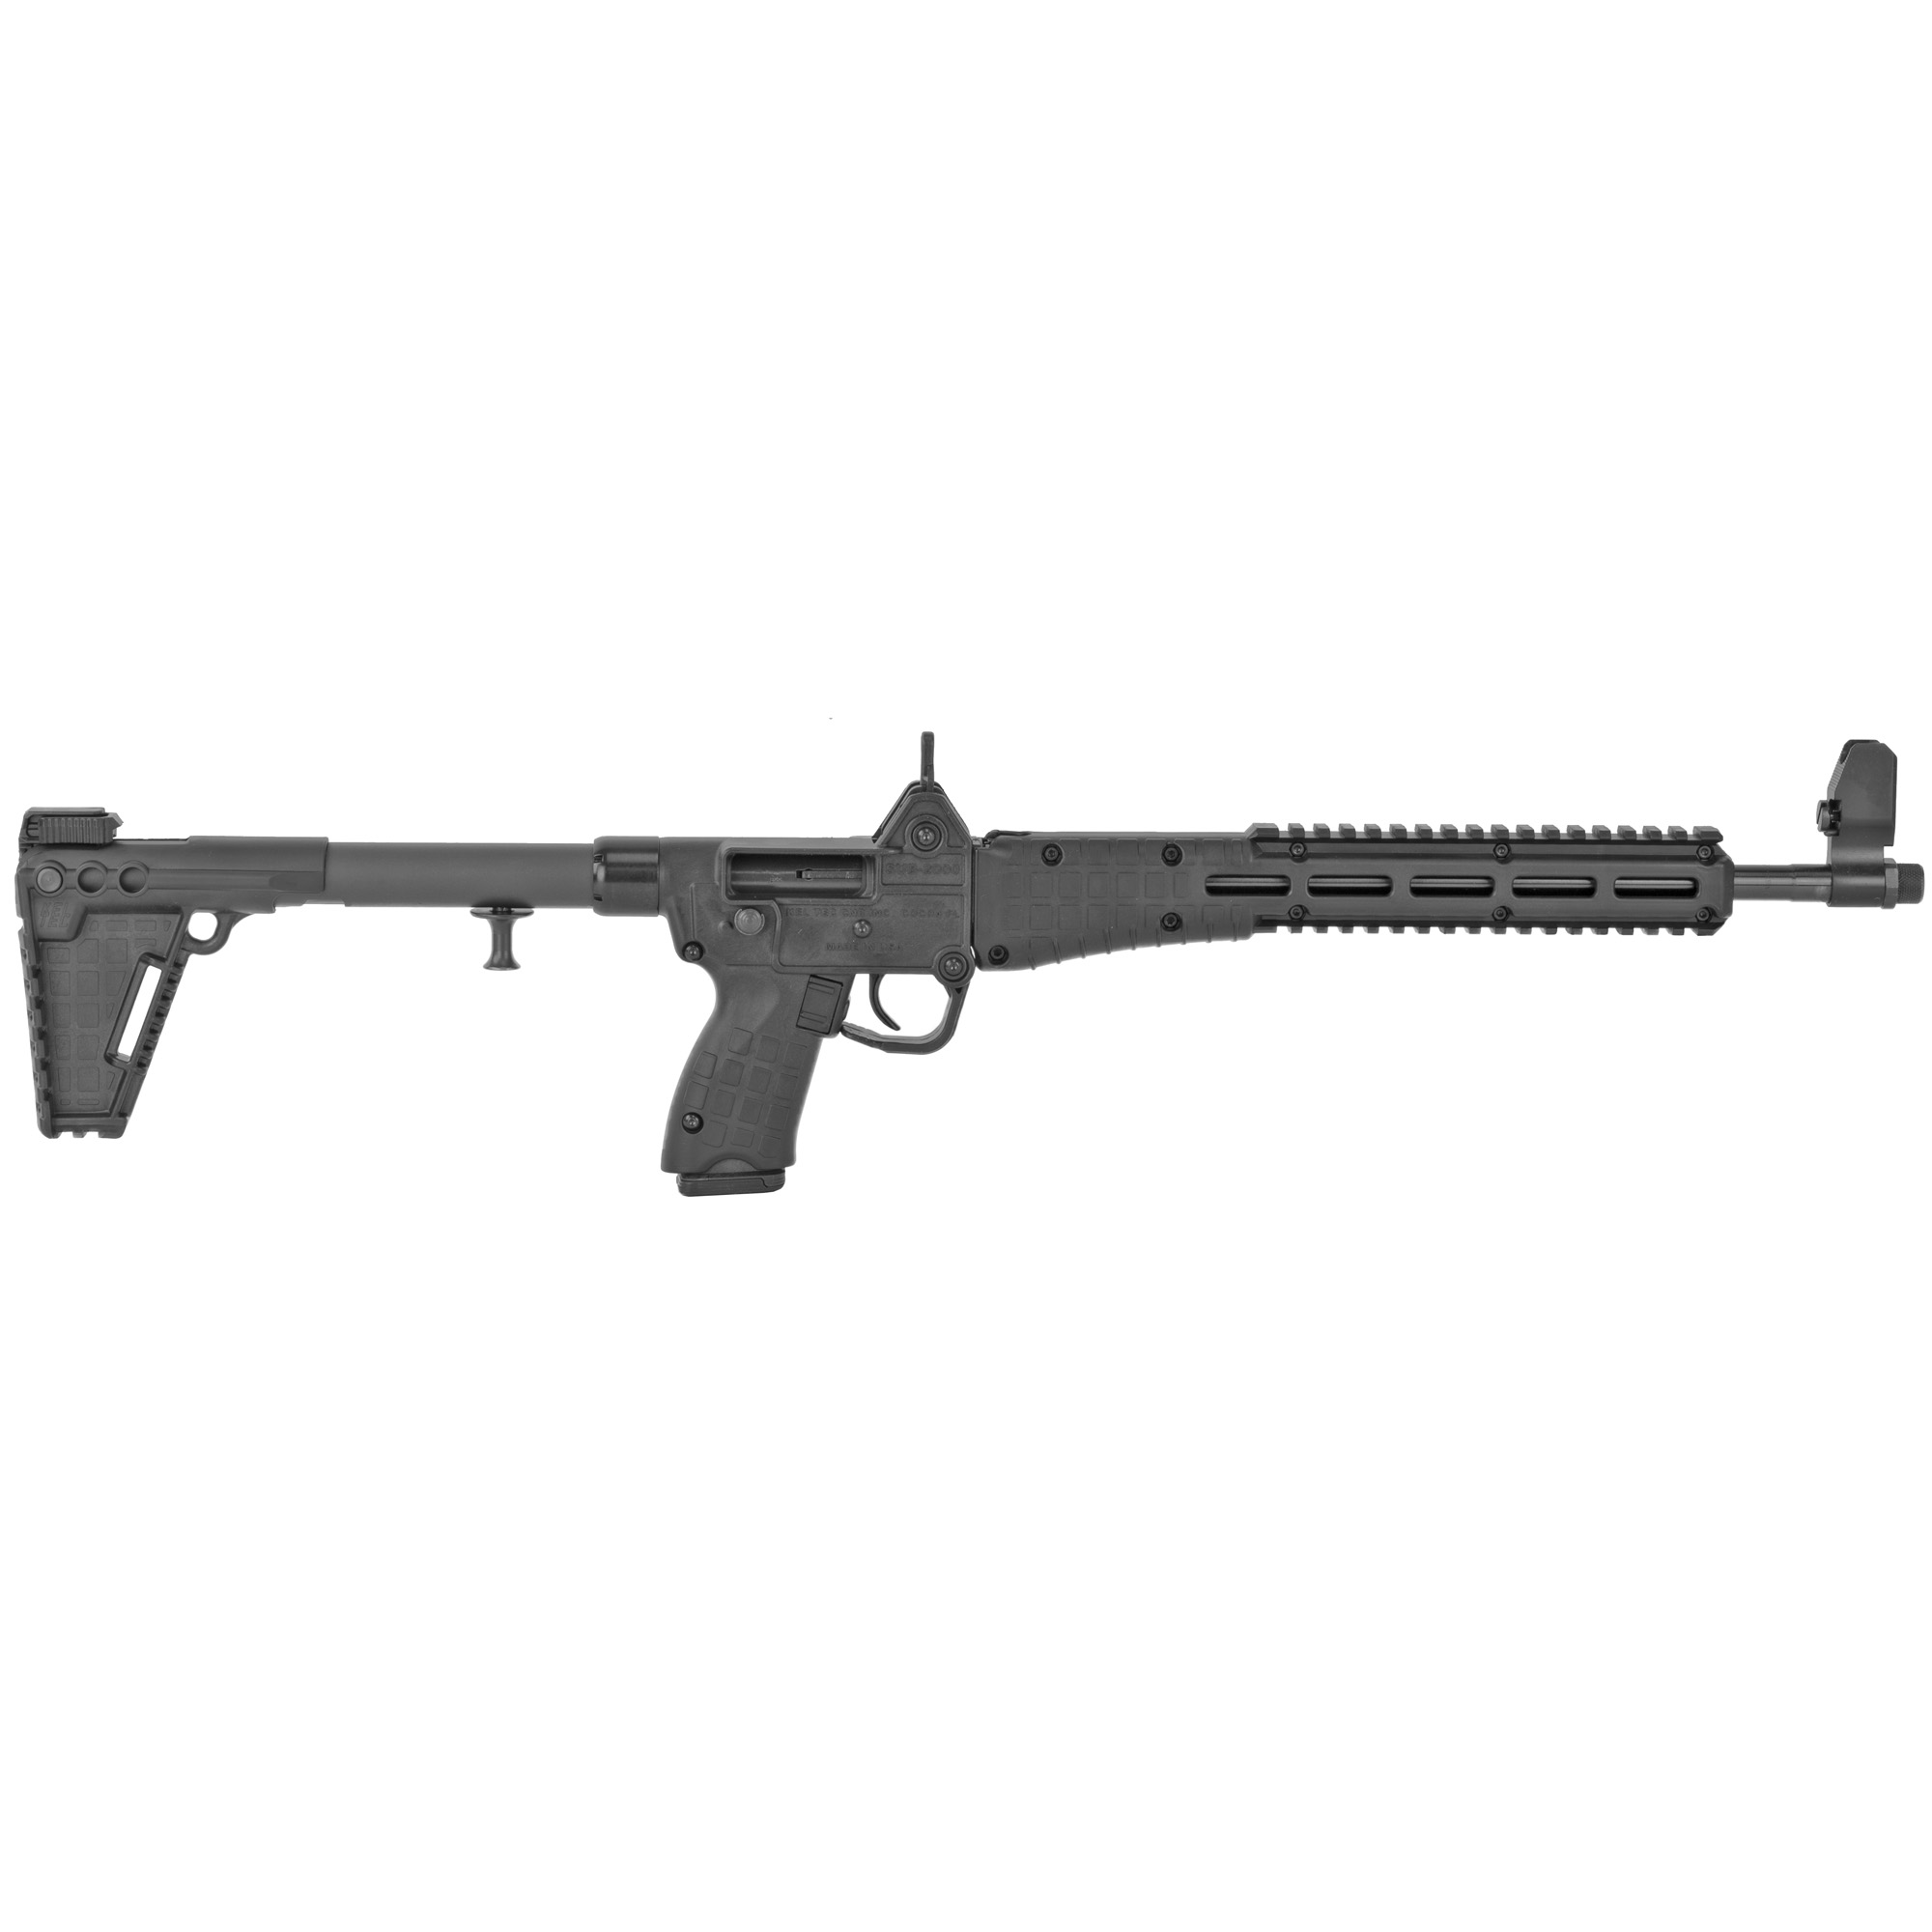 Kel-Tec, Sub 2000 9mm Gen 2, Semi-automatic Rifle, Carbine, 9MM, 16.1" Barrel, Black, Polymer Frame, Black, Adjustable Integral Sights, 17 Rounds, 1 Glock 17 Style Mag